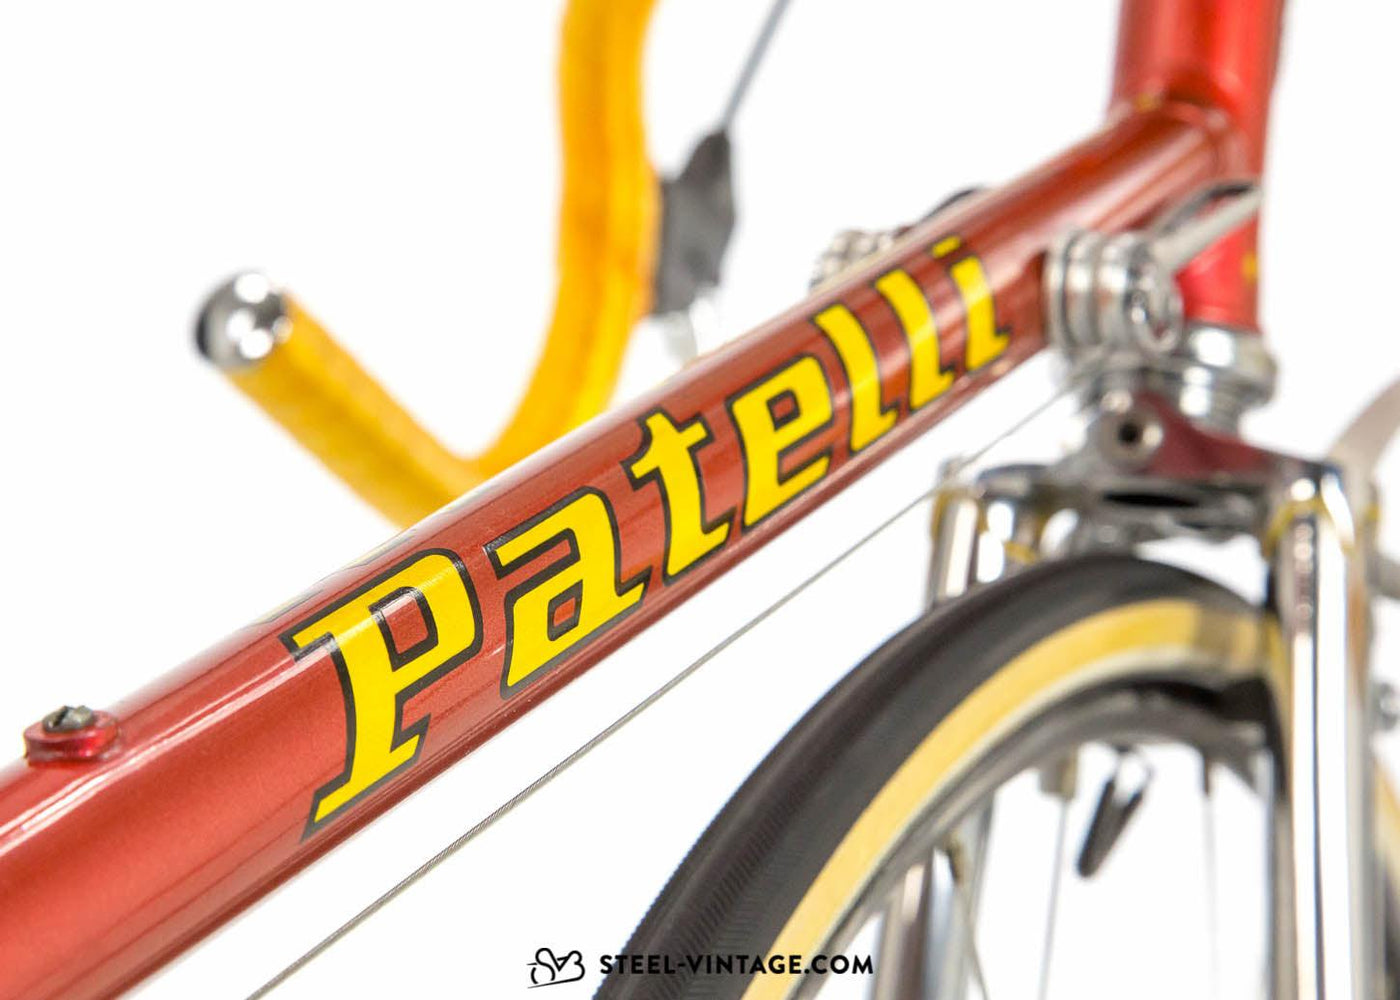 Patelli Champion Special Road Bike 1979 - Steel Vintage Bikes